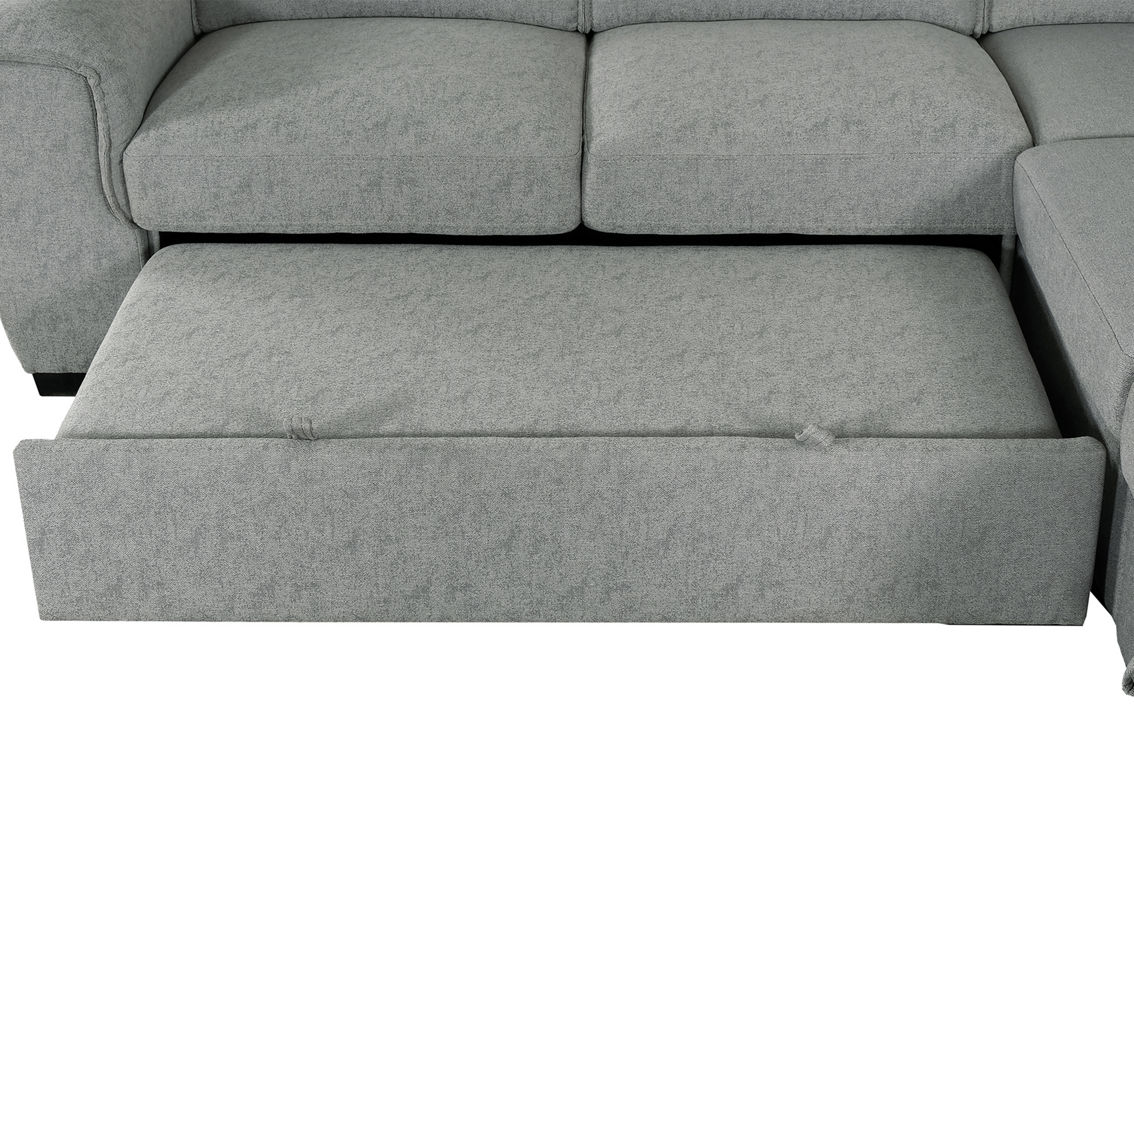 Primo International Joss Corner Sofa Bed with Storage - Image 5 of 5